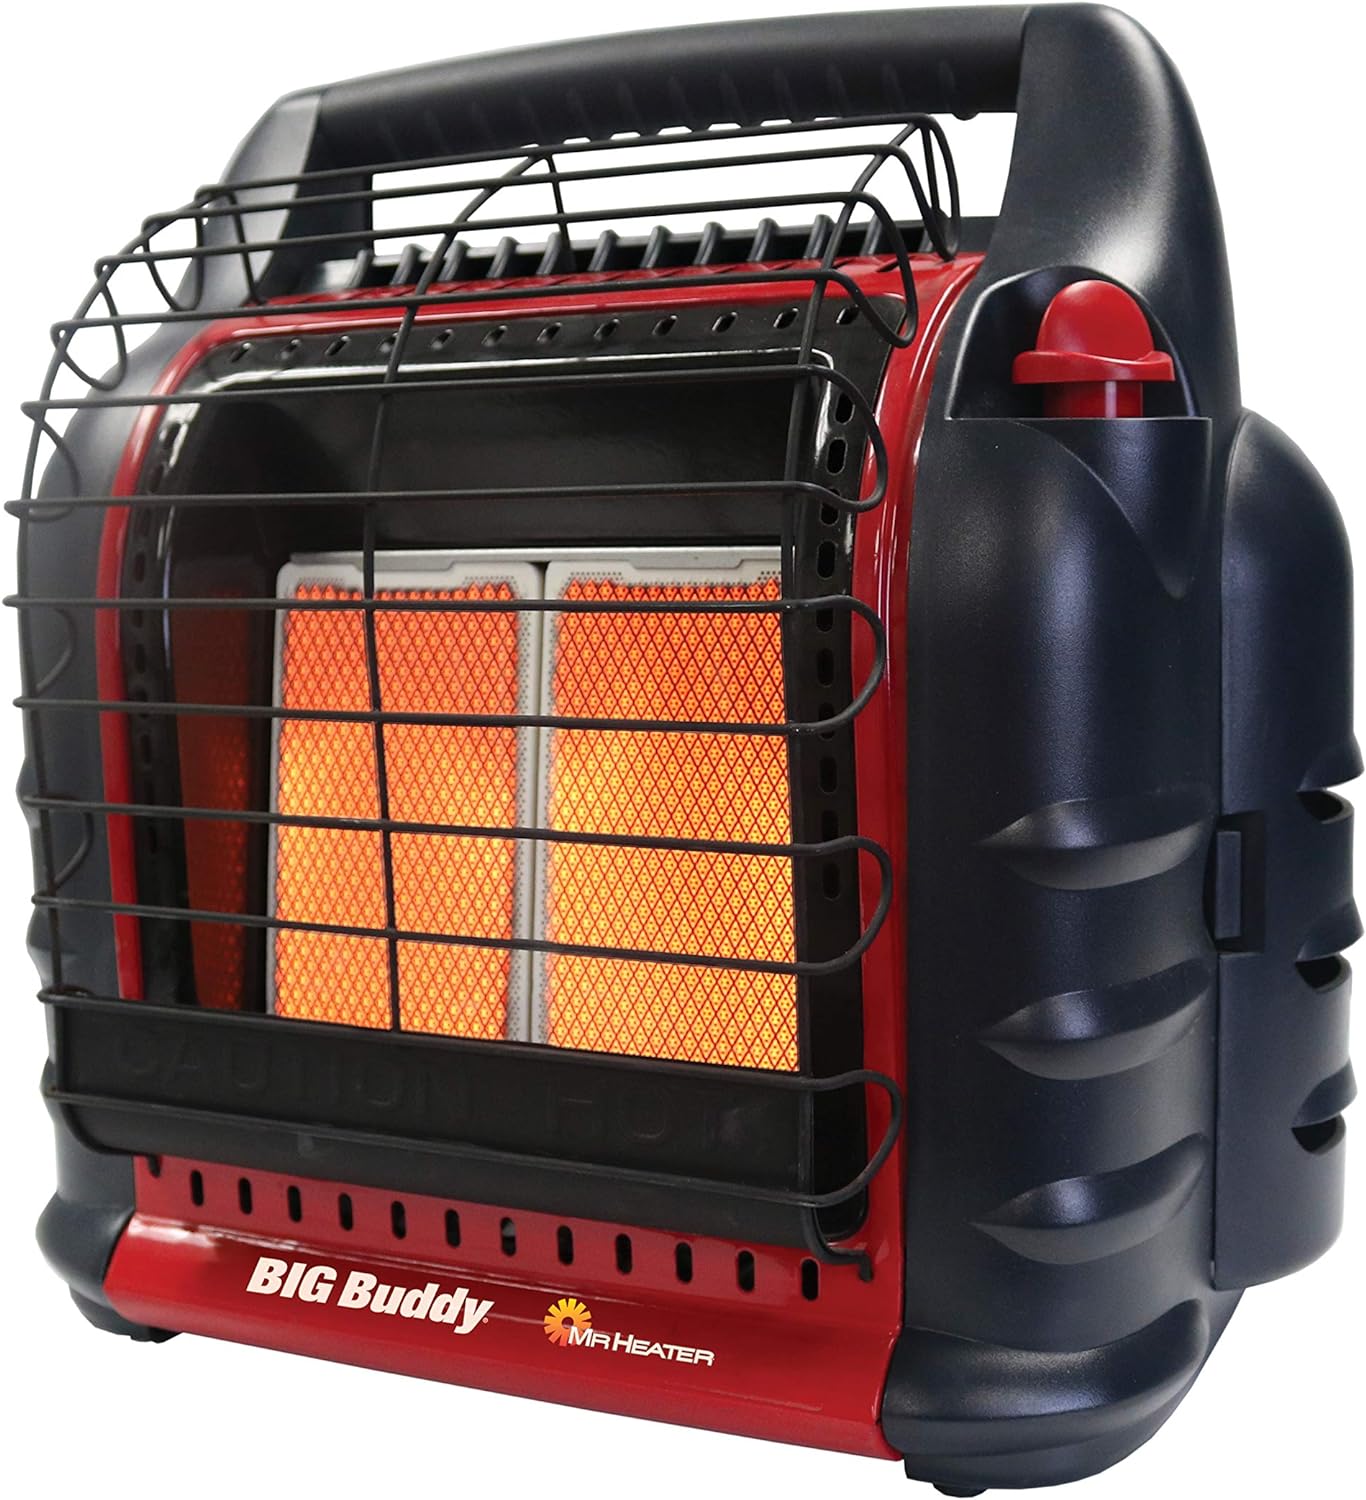 18,000 BTU Big Buddy Portable Propane Heater Review